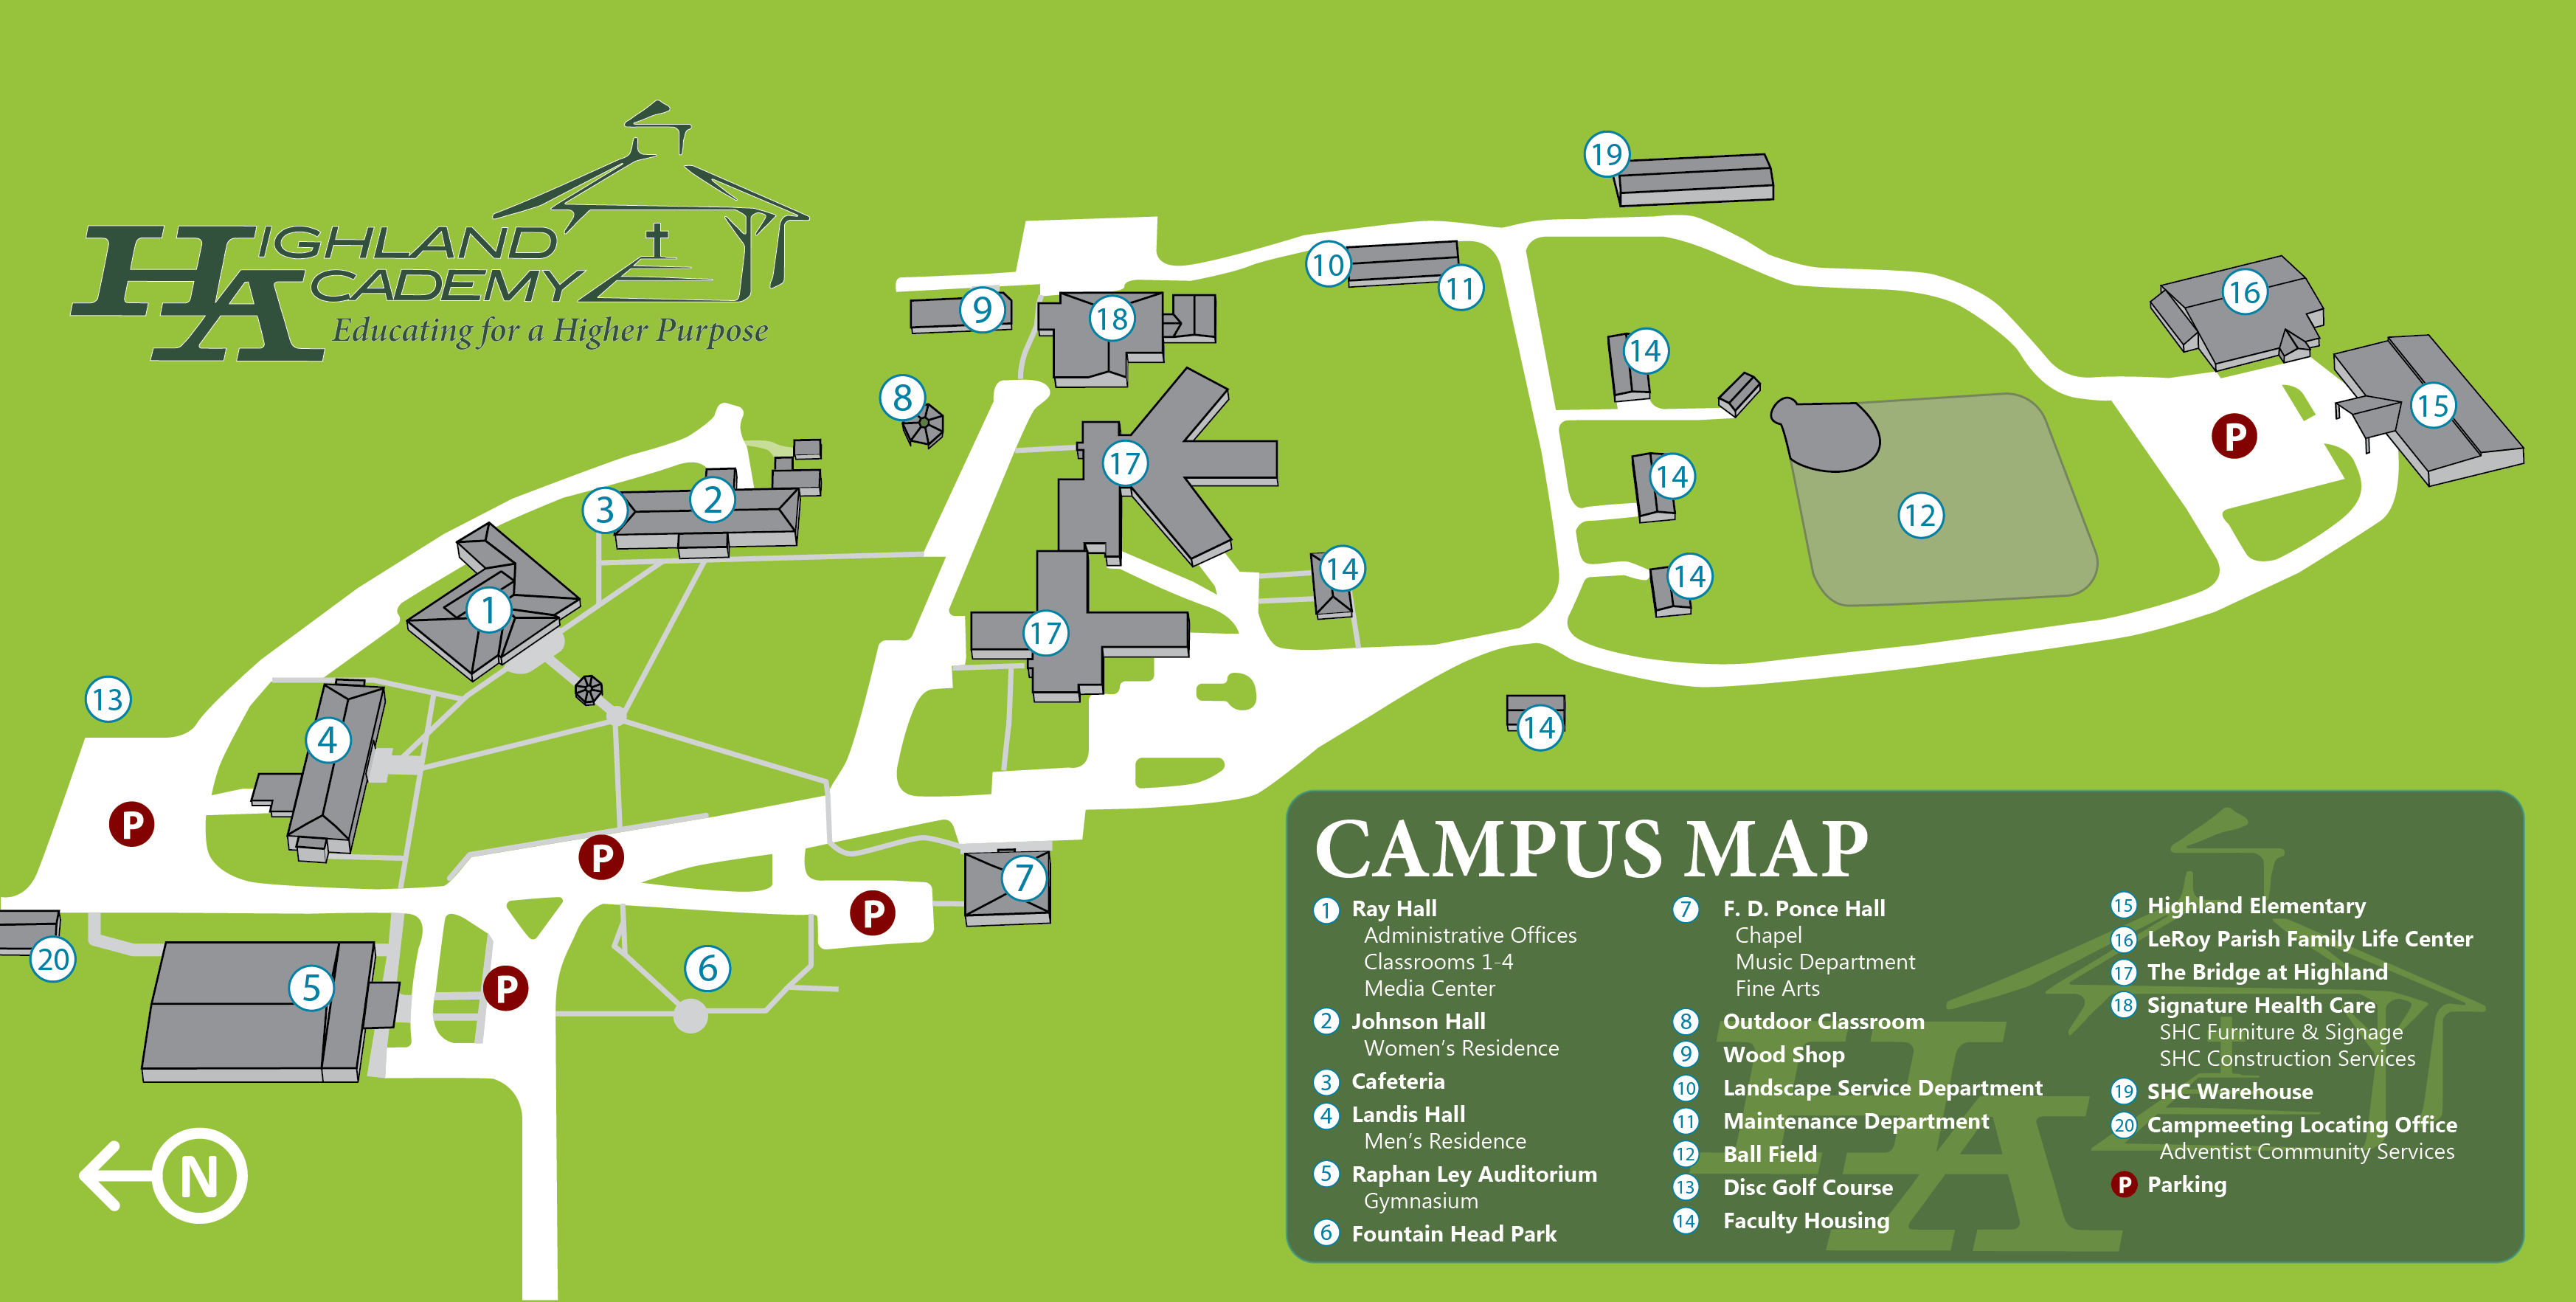 Zodiac Academy Campus Map